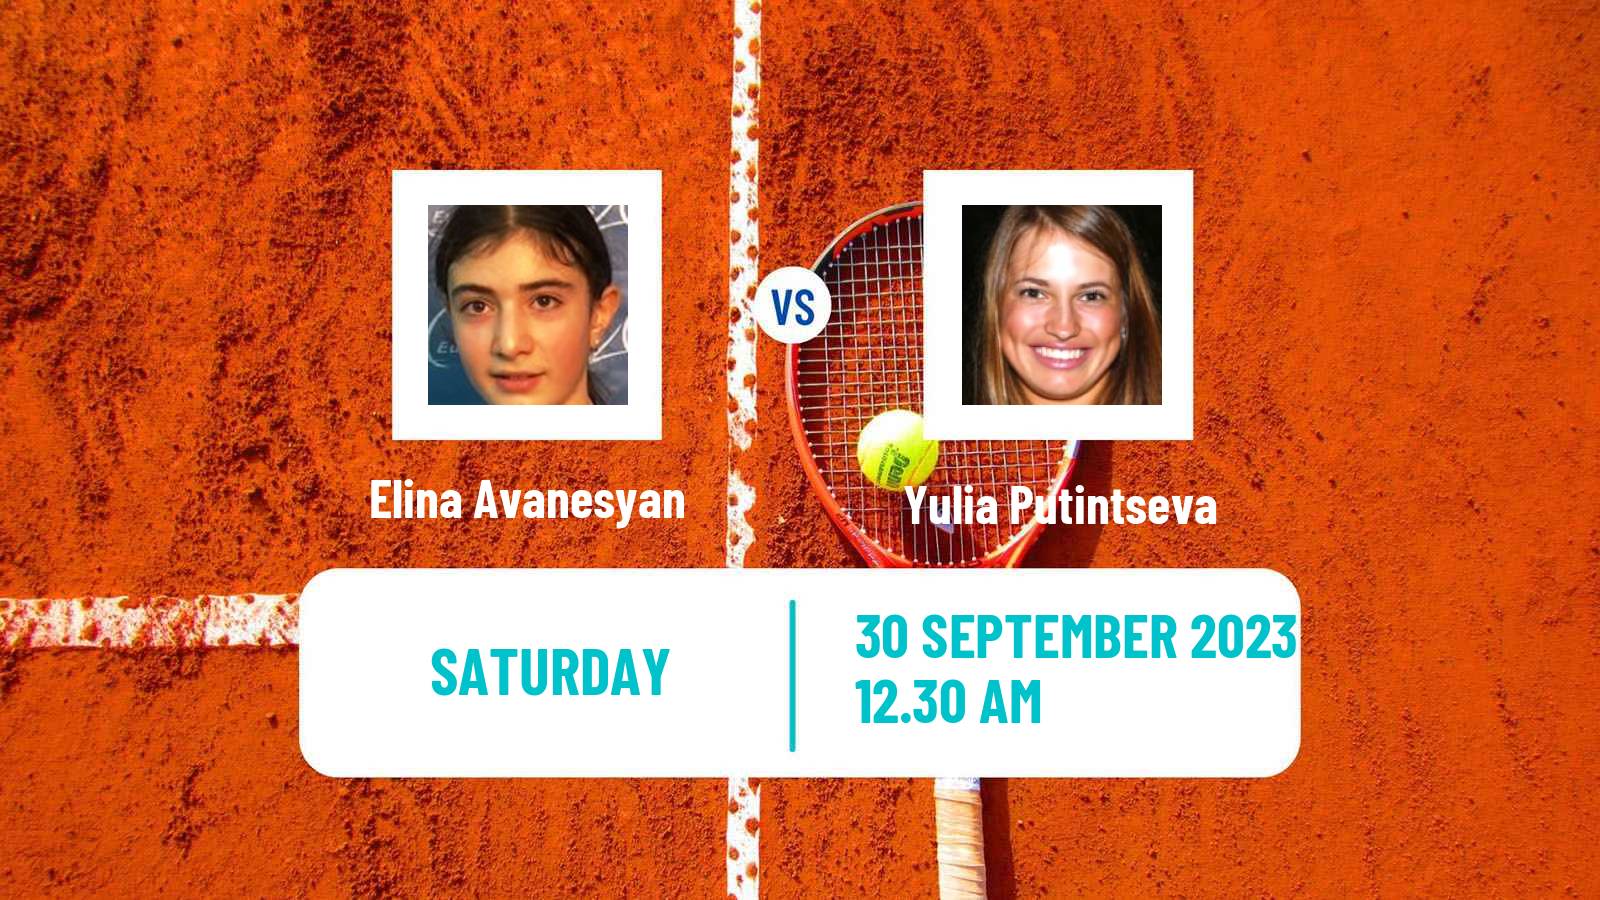 Tennis WTA Beijing Elina Avanesyan - Yulia Putintseva